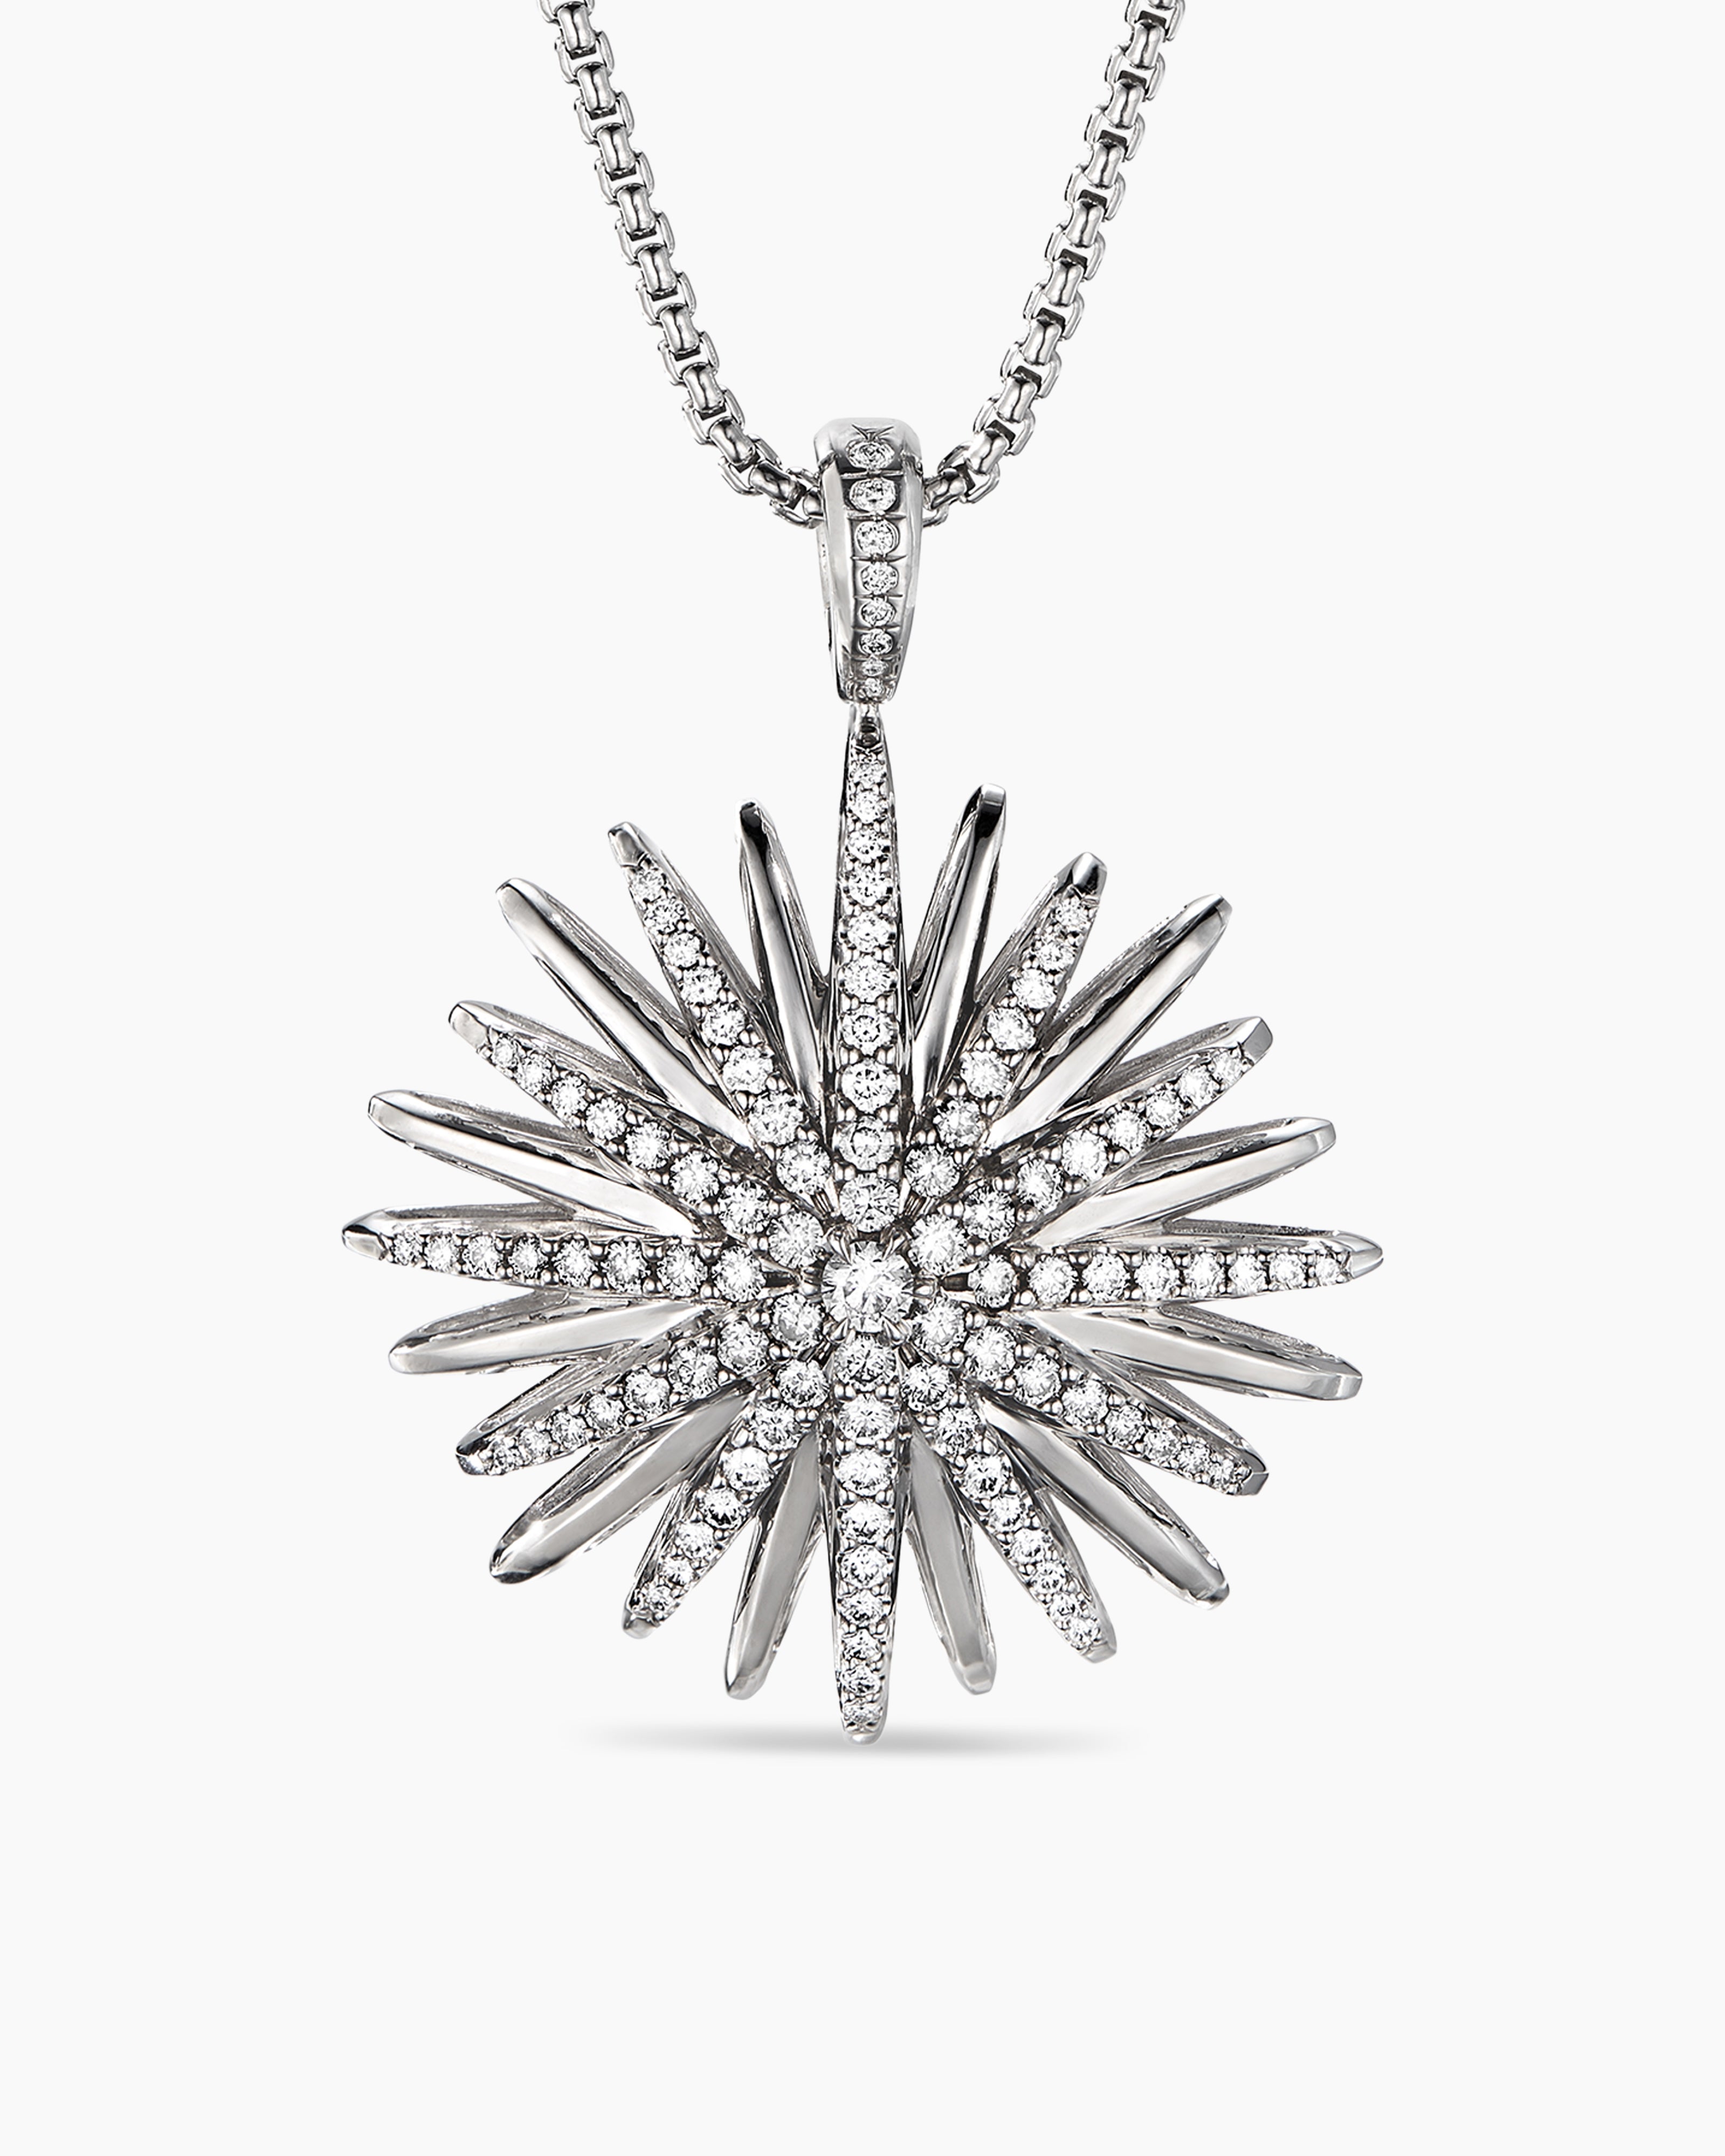 Starburst Pendant in Sterling Silver with Diamonds, 32mm | David